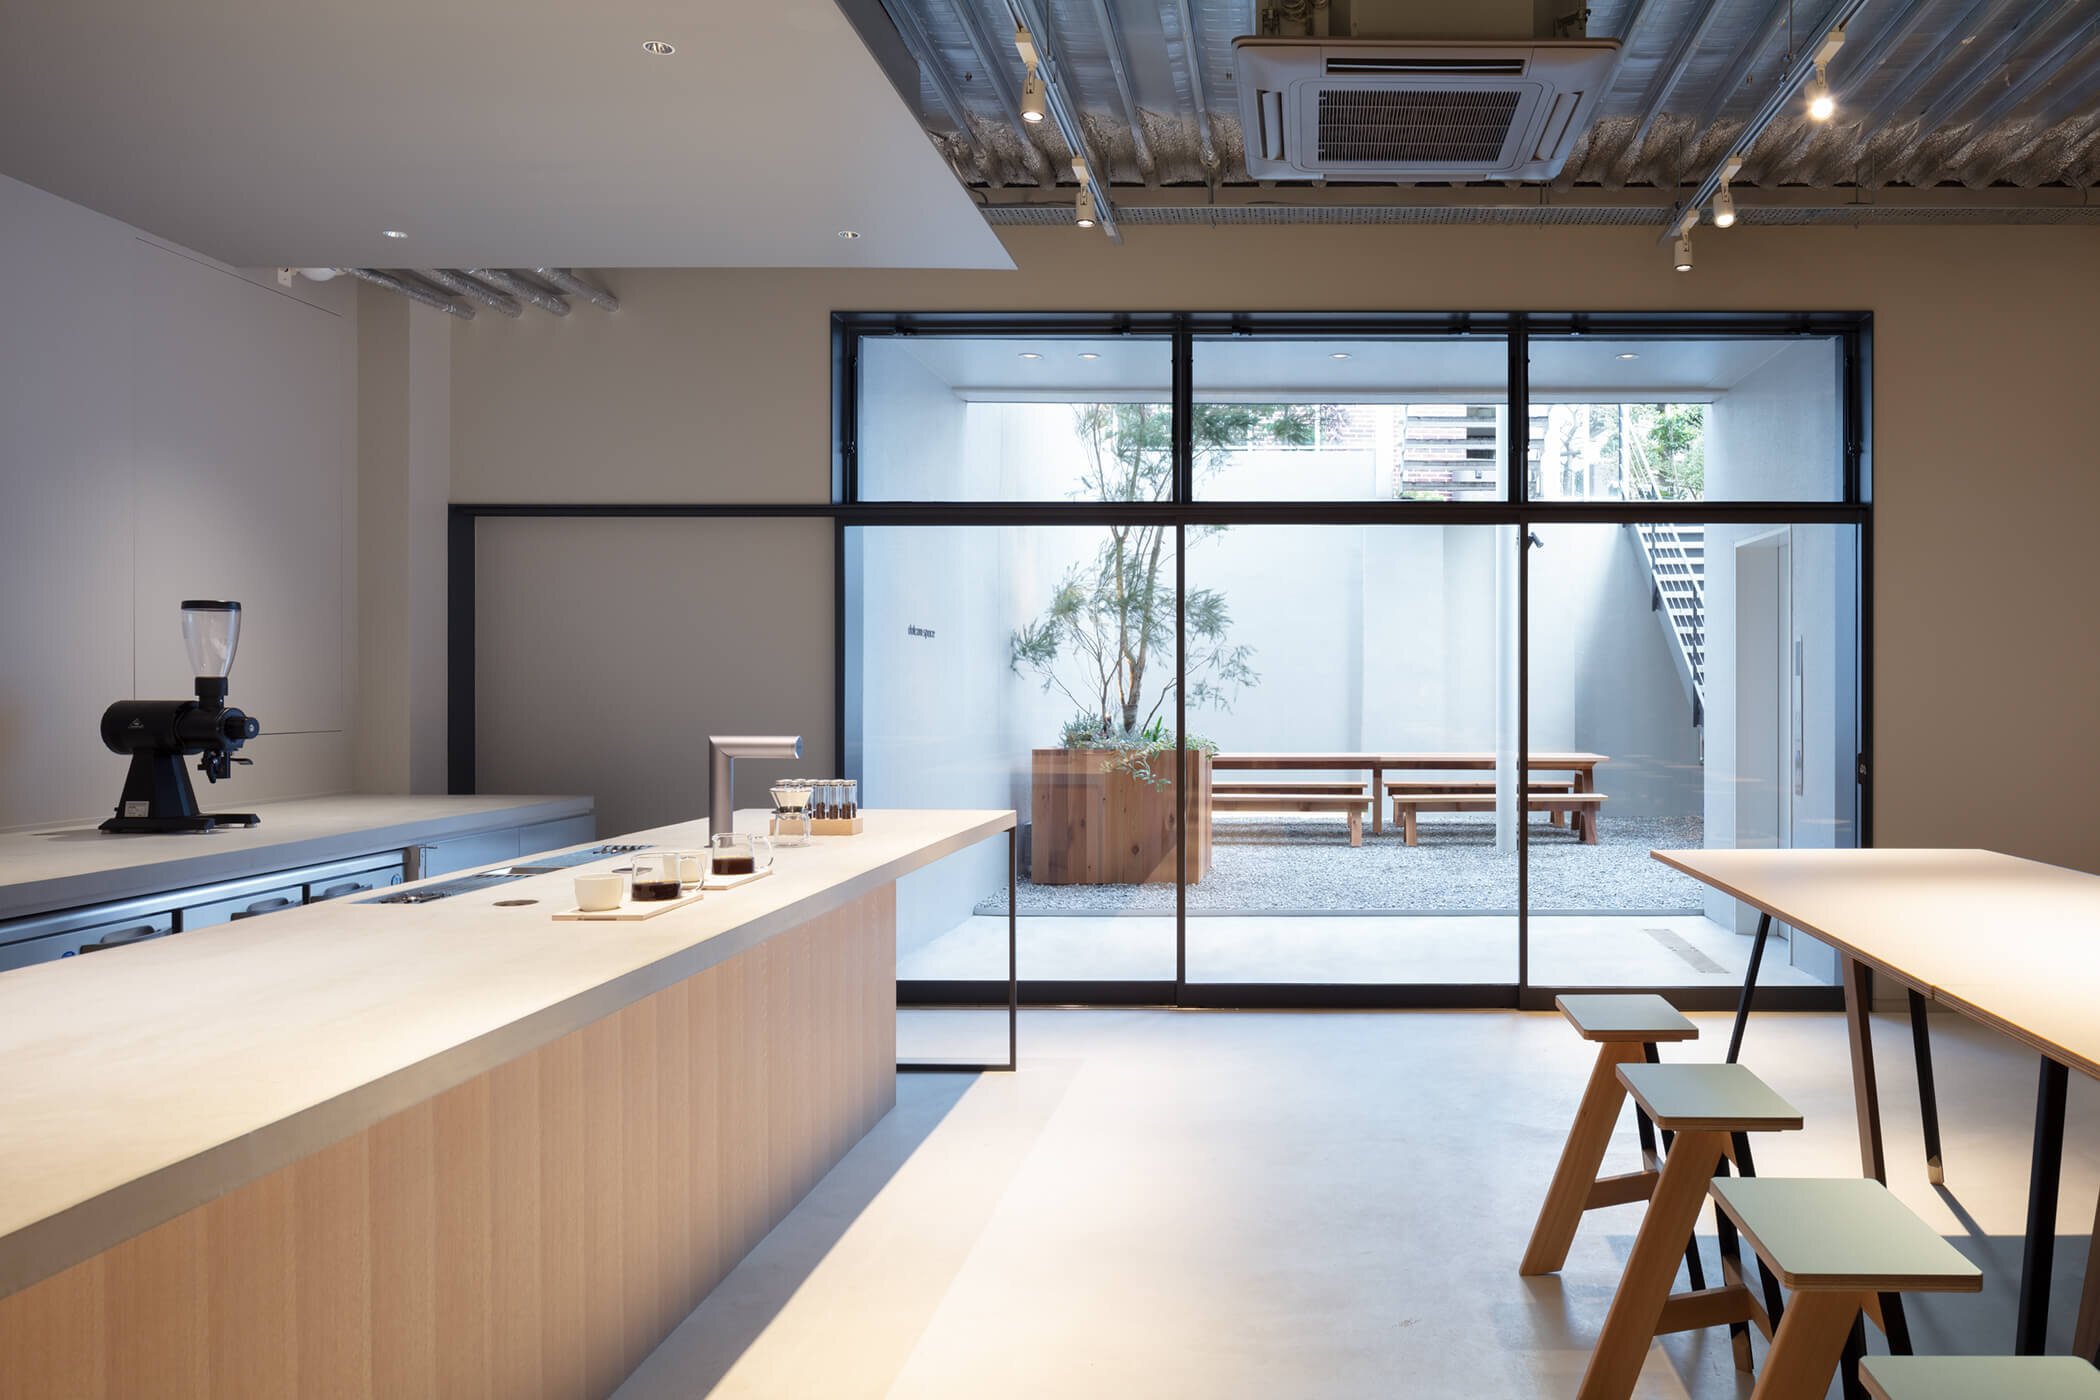 keiji-ashizawa-design-dotcom-space-tokyo-japan-cafe-interior-design-idreit-111.jpg